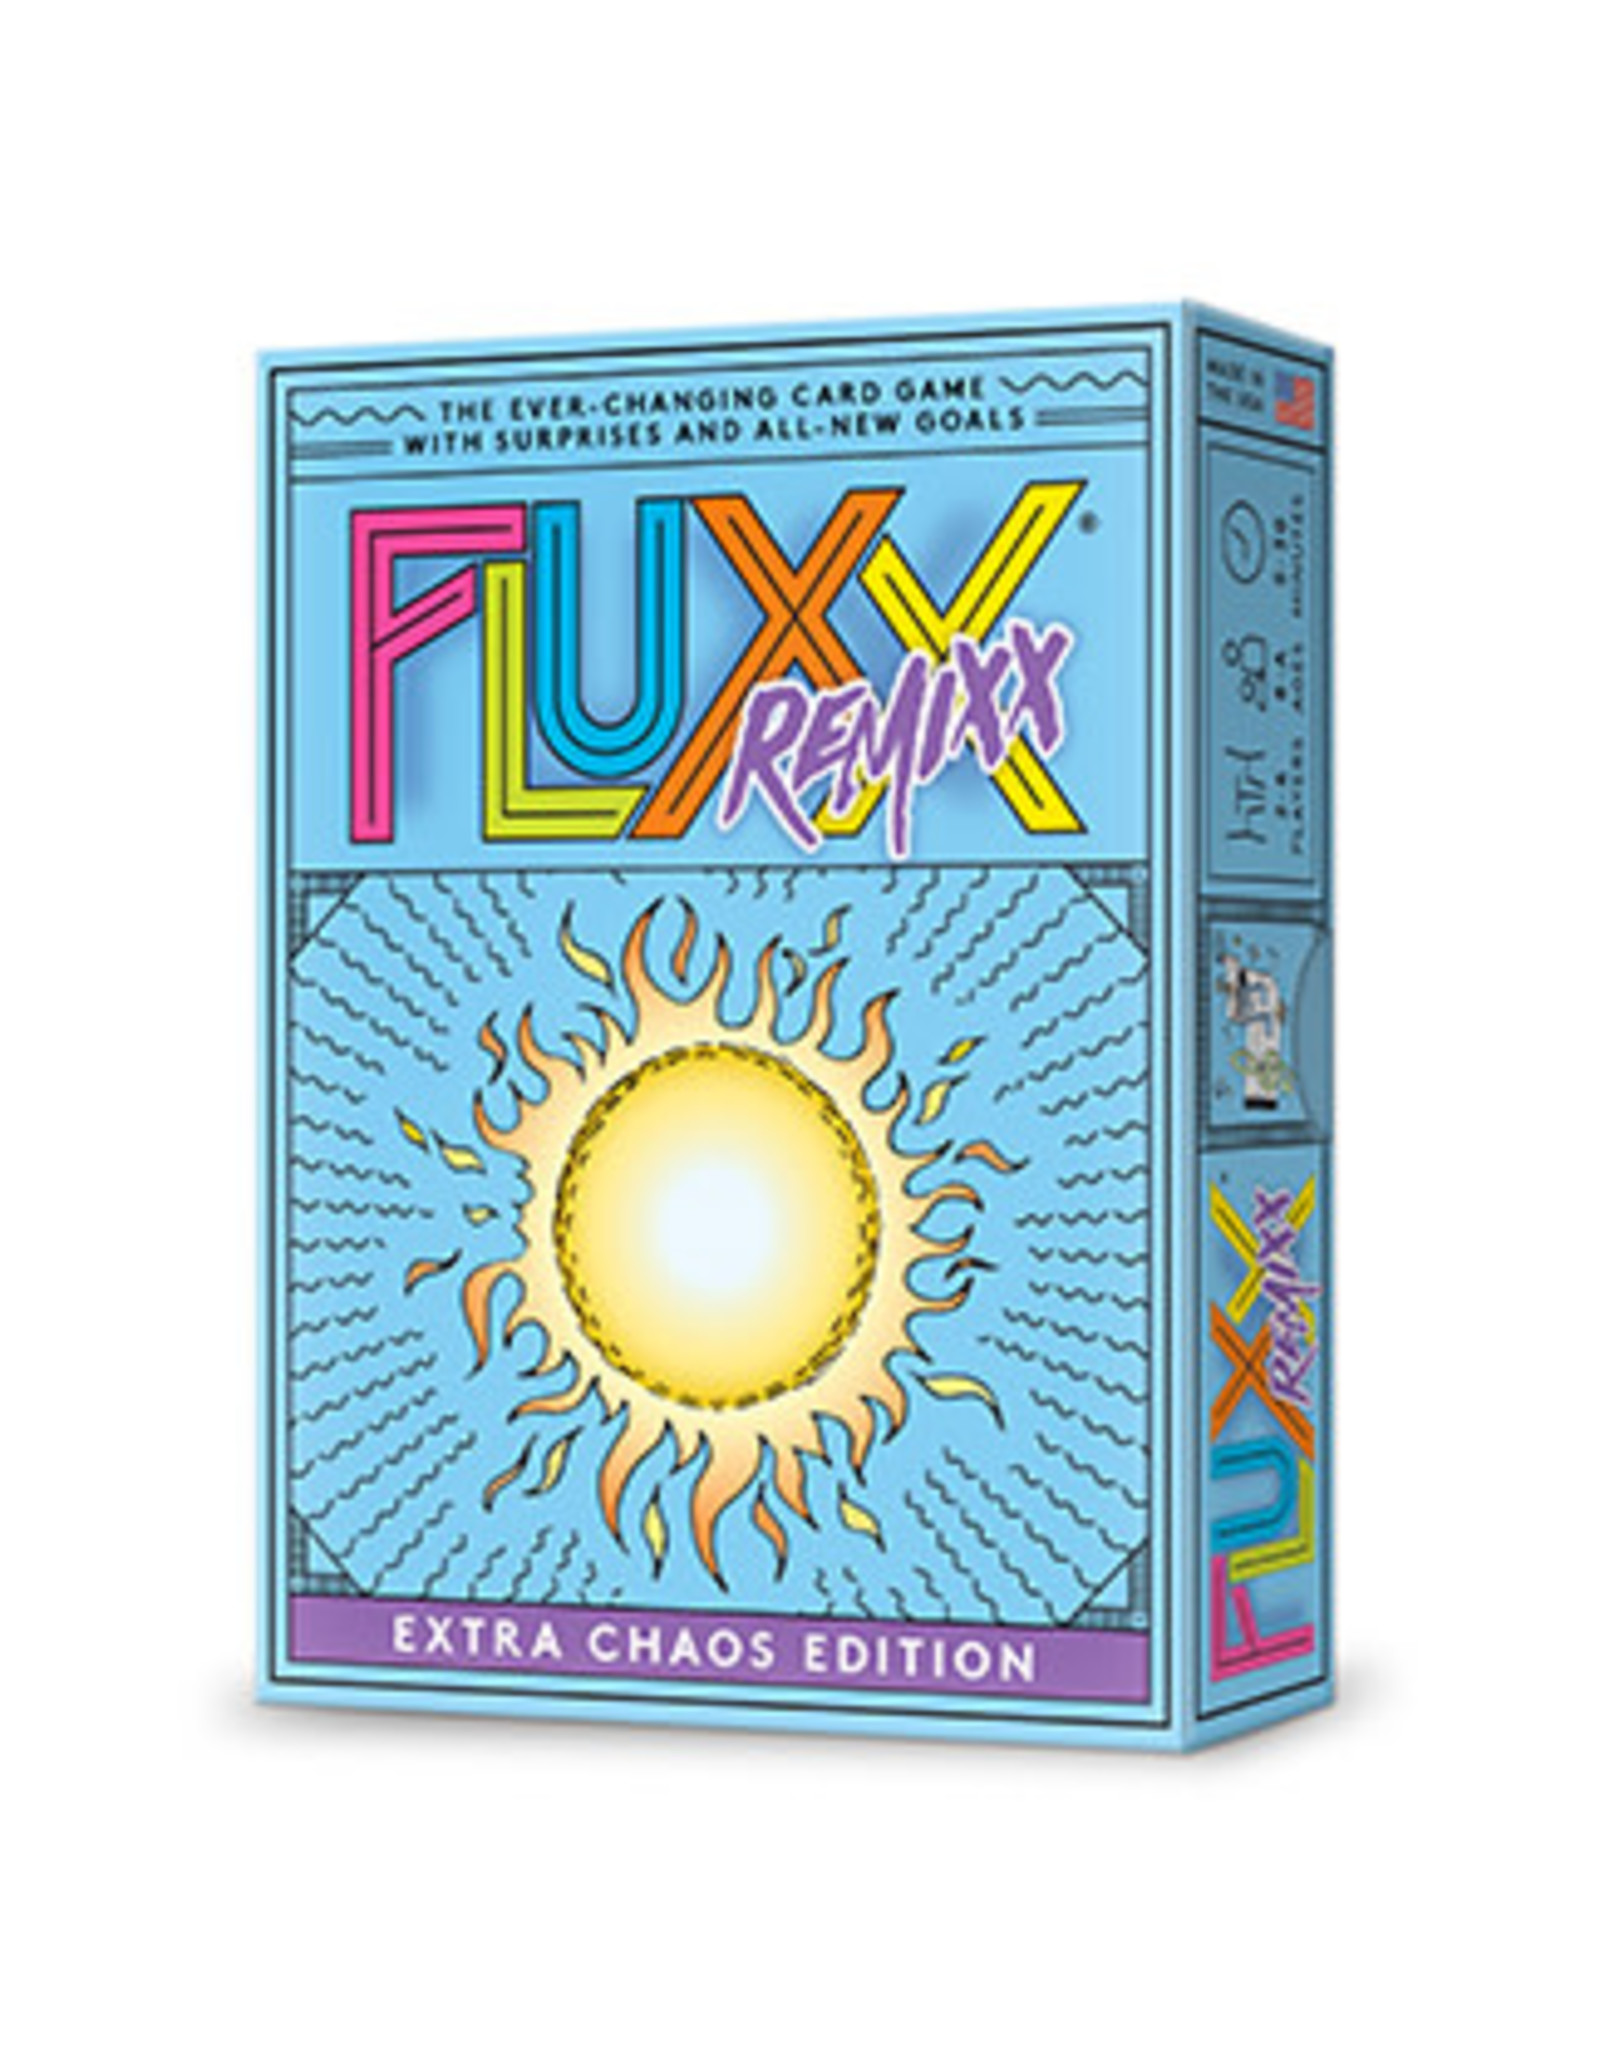 Looney Labs Fluxx Remixx